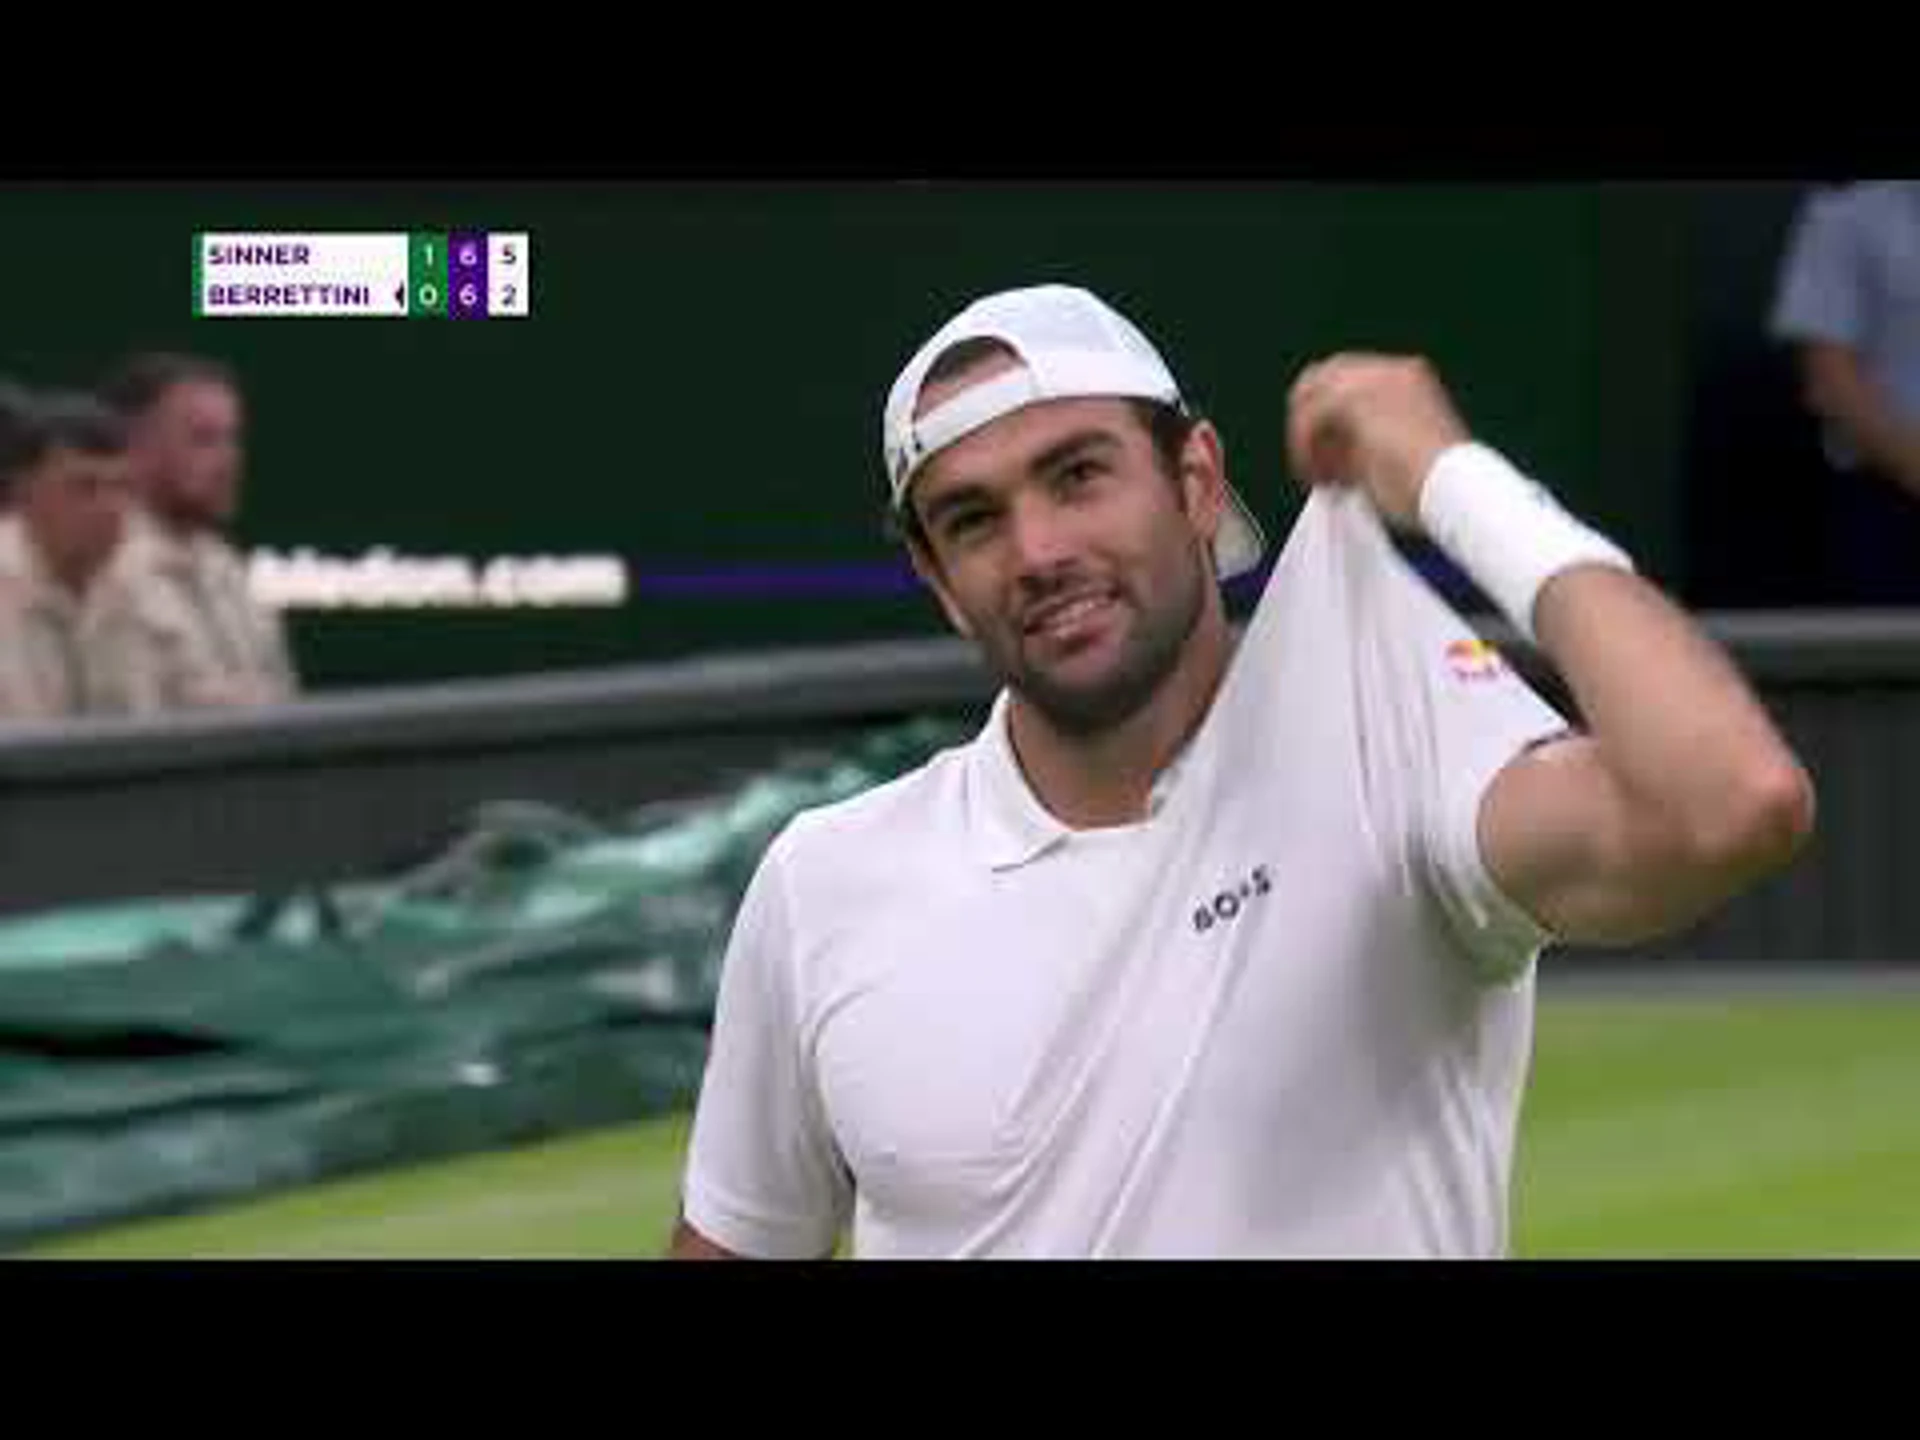 Jannik Sinner v Matteo Berrettini | Day 3 Highlights | Wimbledon